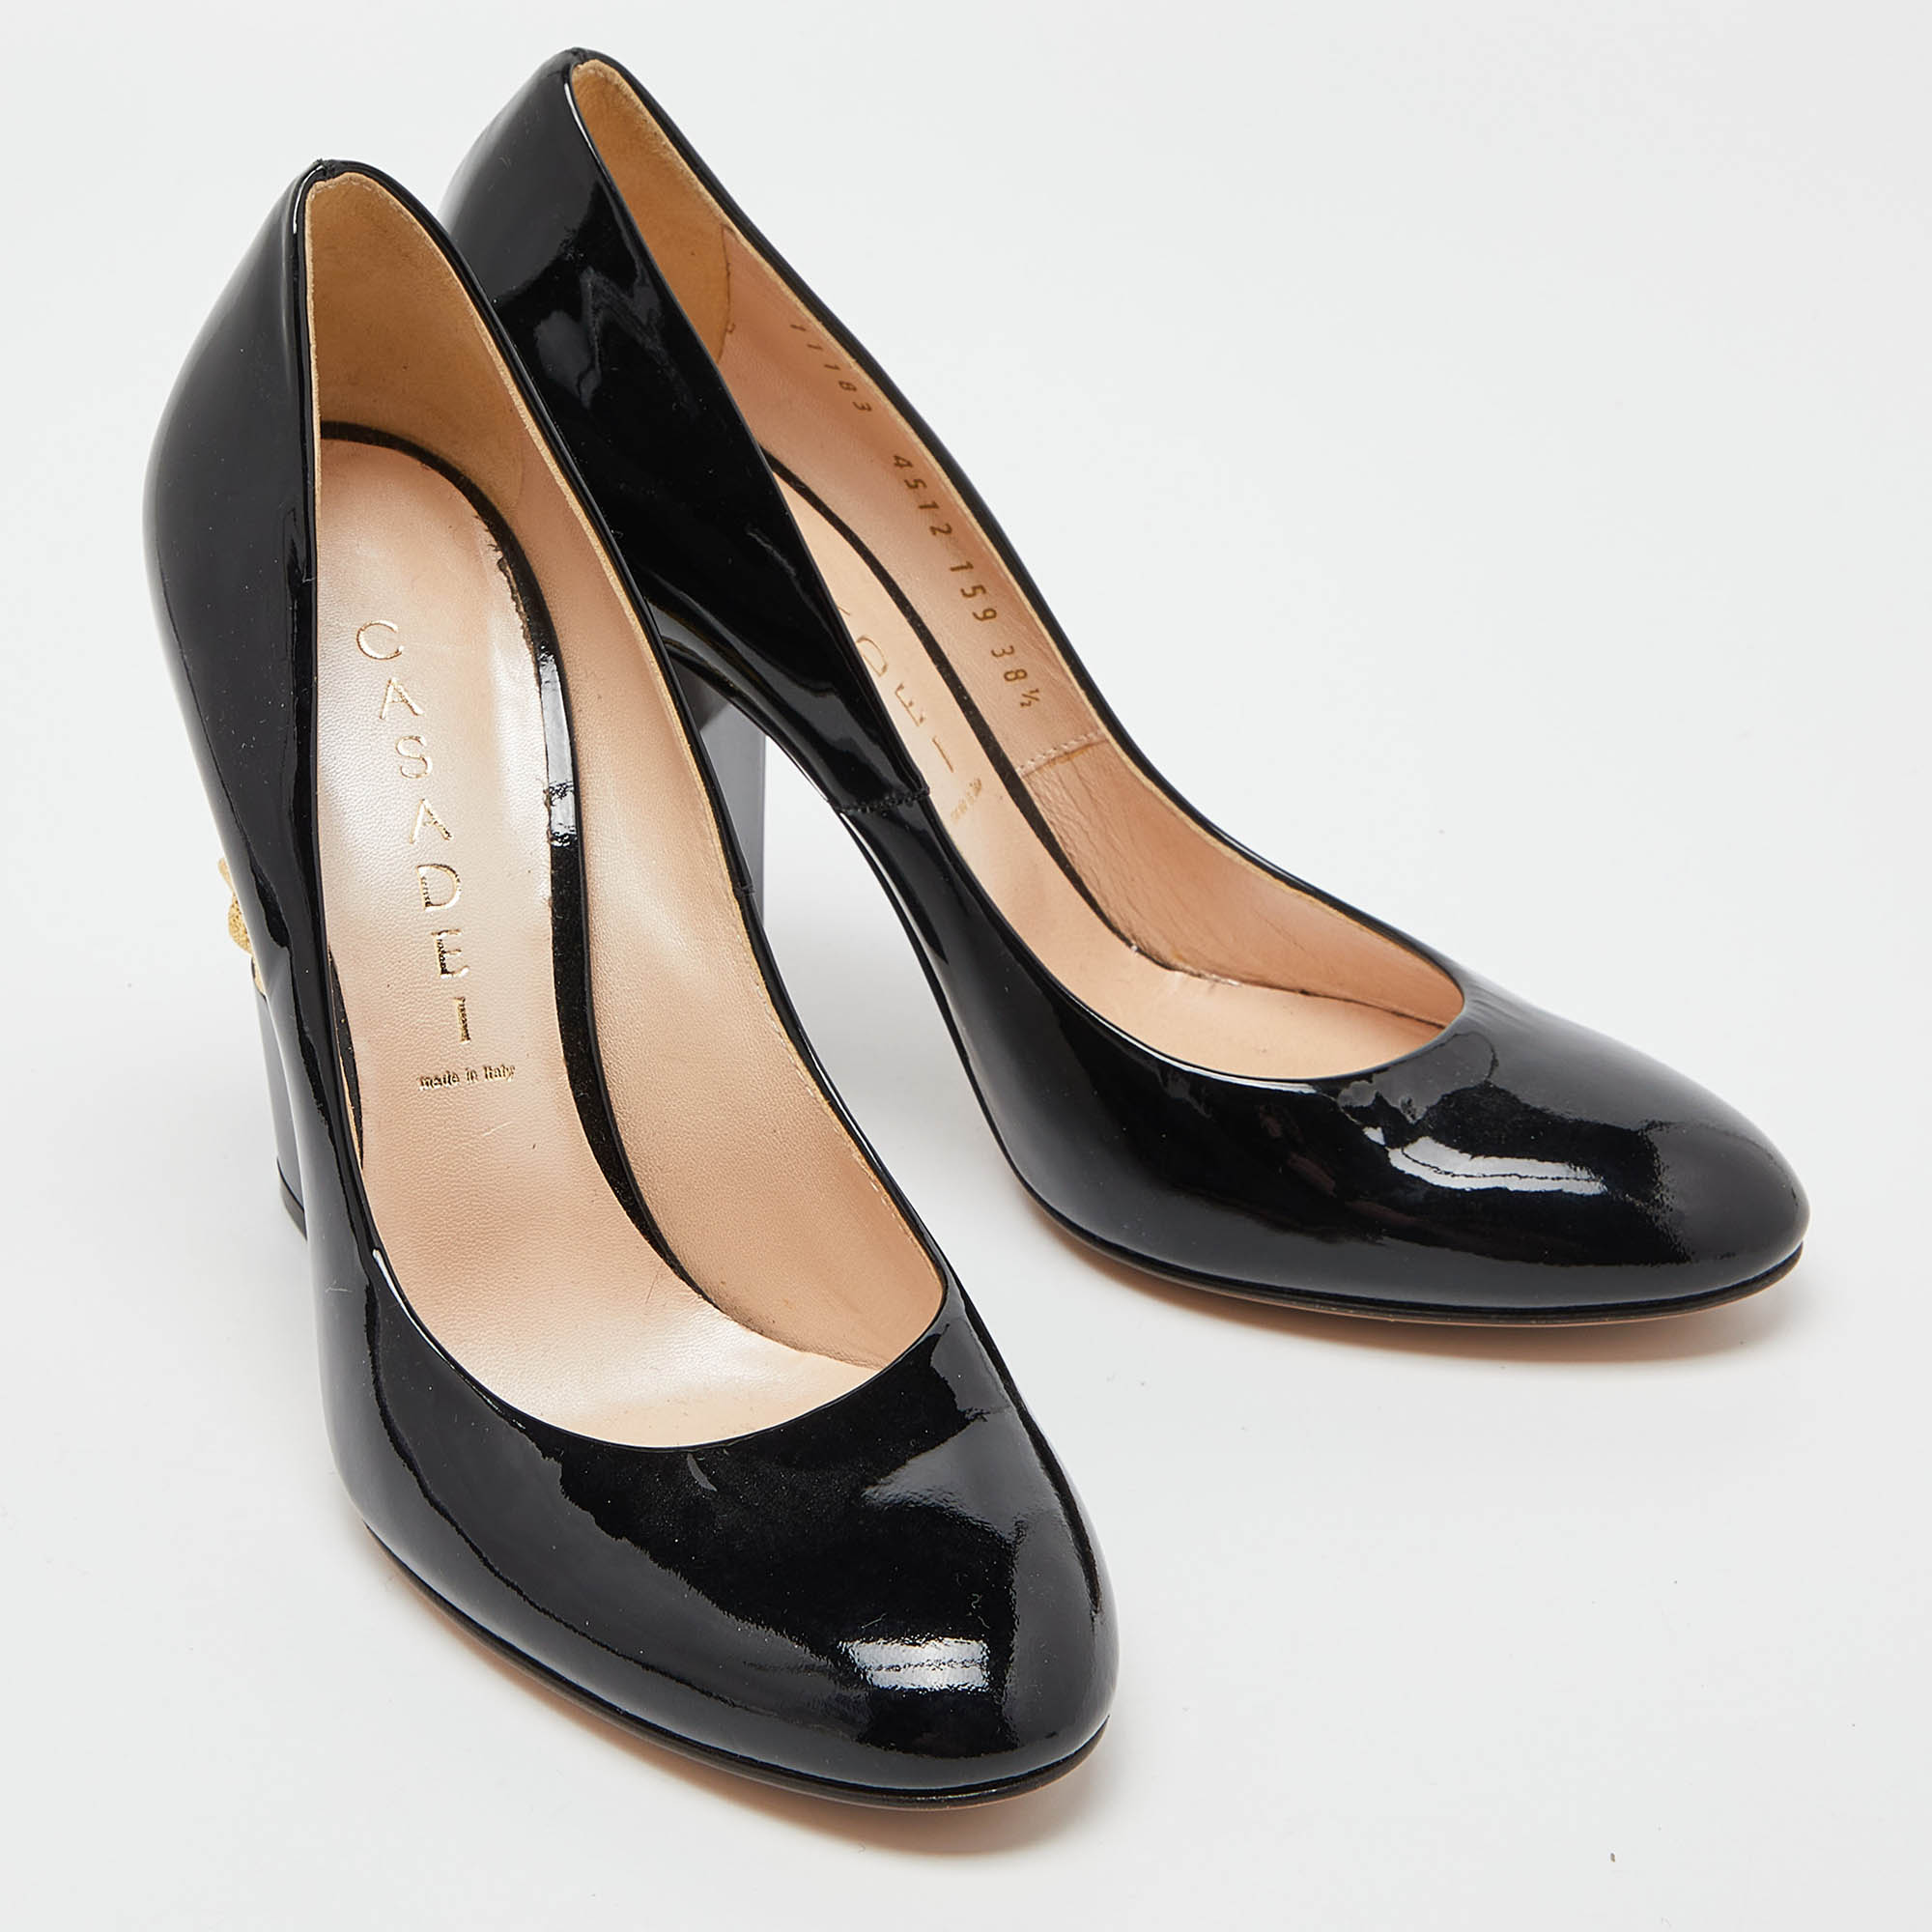 Casadei Black Patent Leather Chain Motif Block Heel Round Toe Pumps Size 38.5